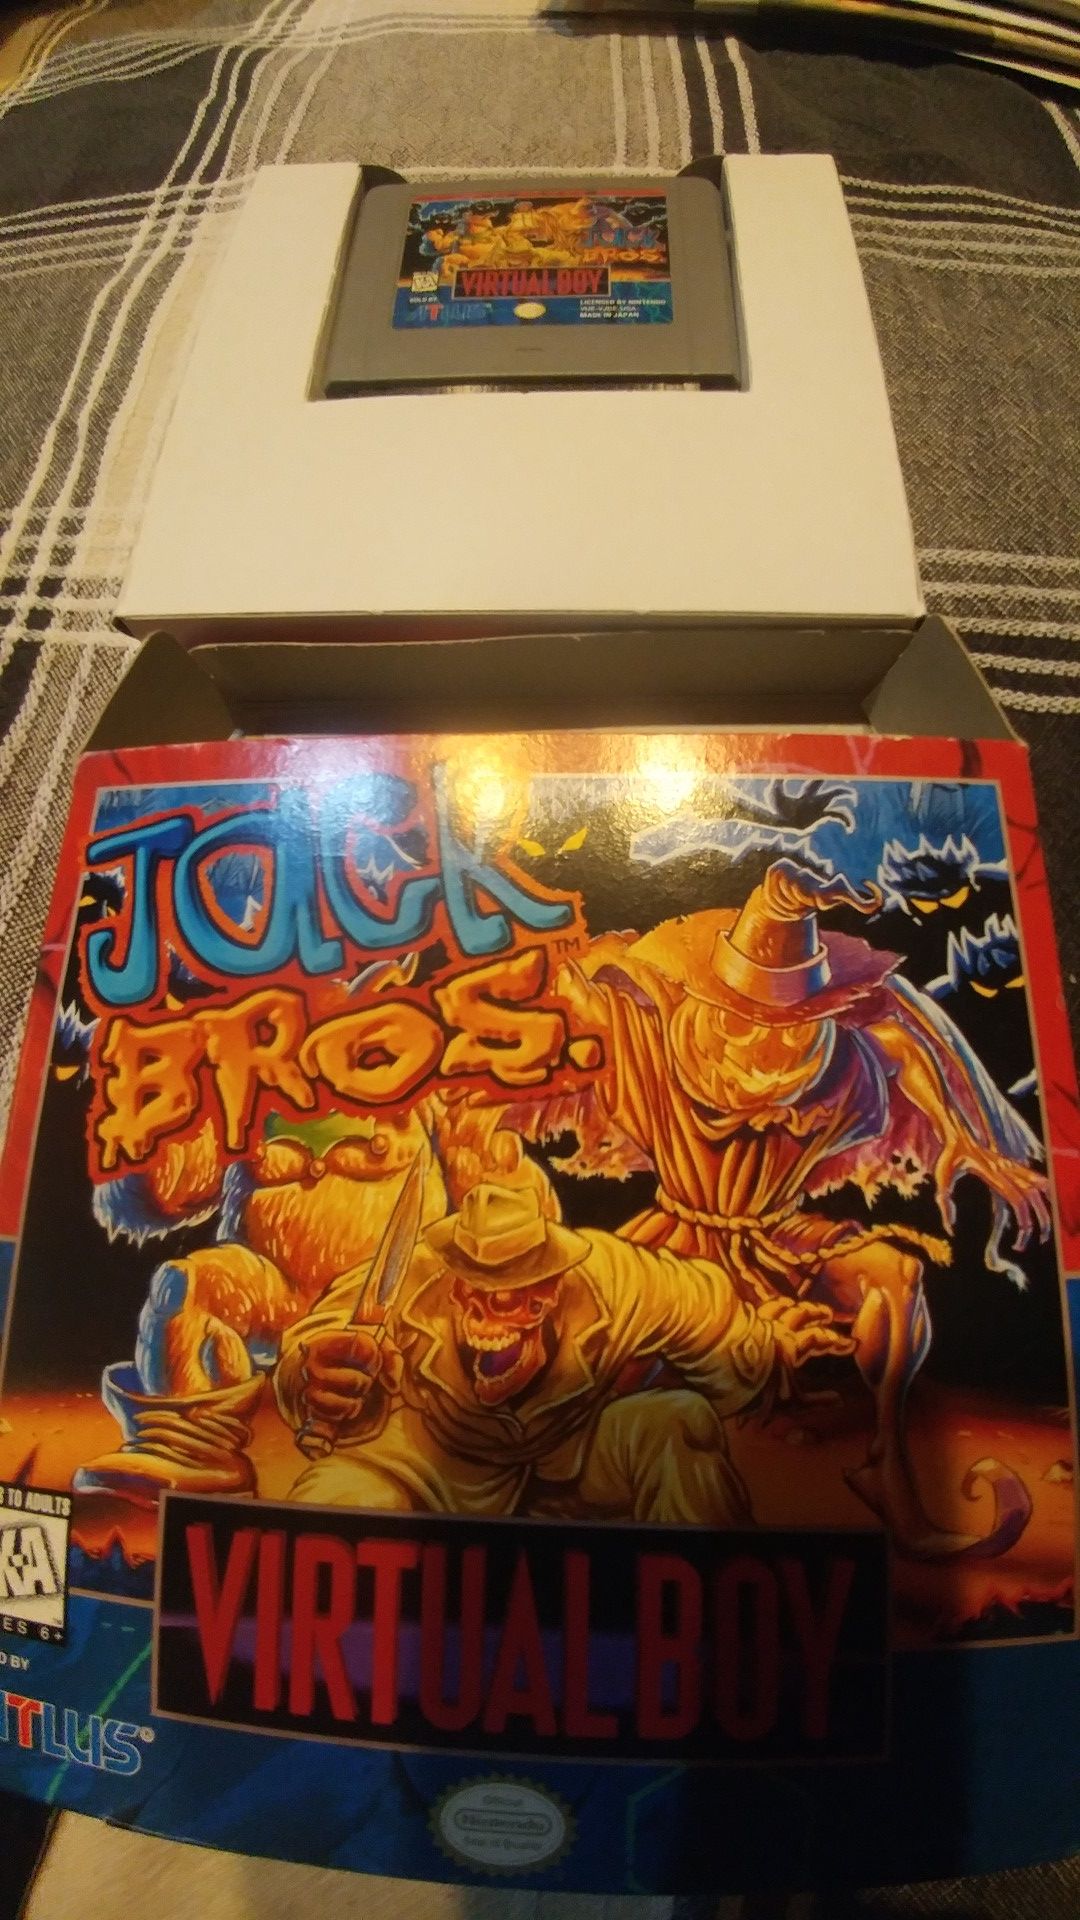 Jack Bros. Virtual Boy - Game, Box, and Inserts